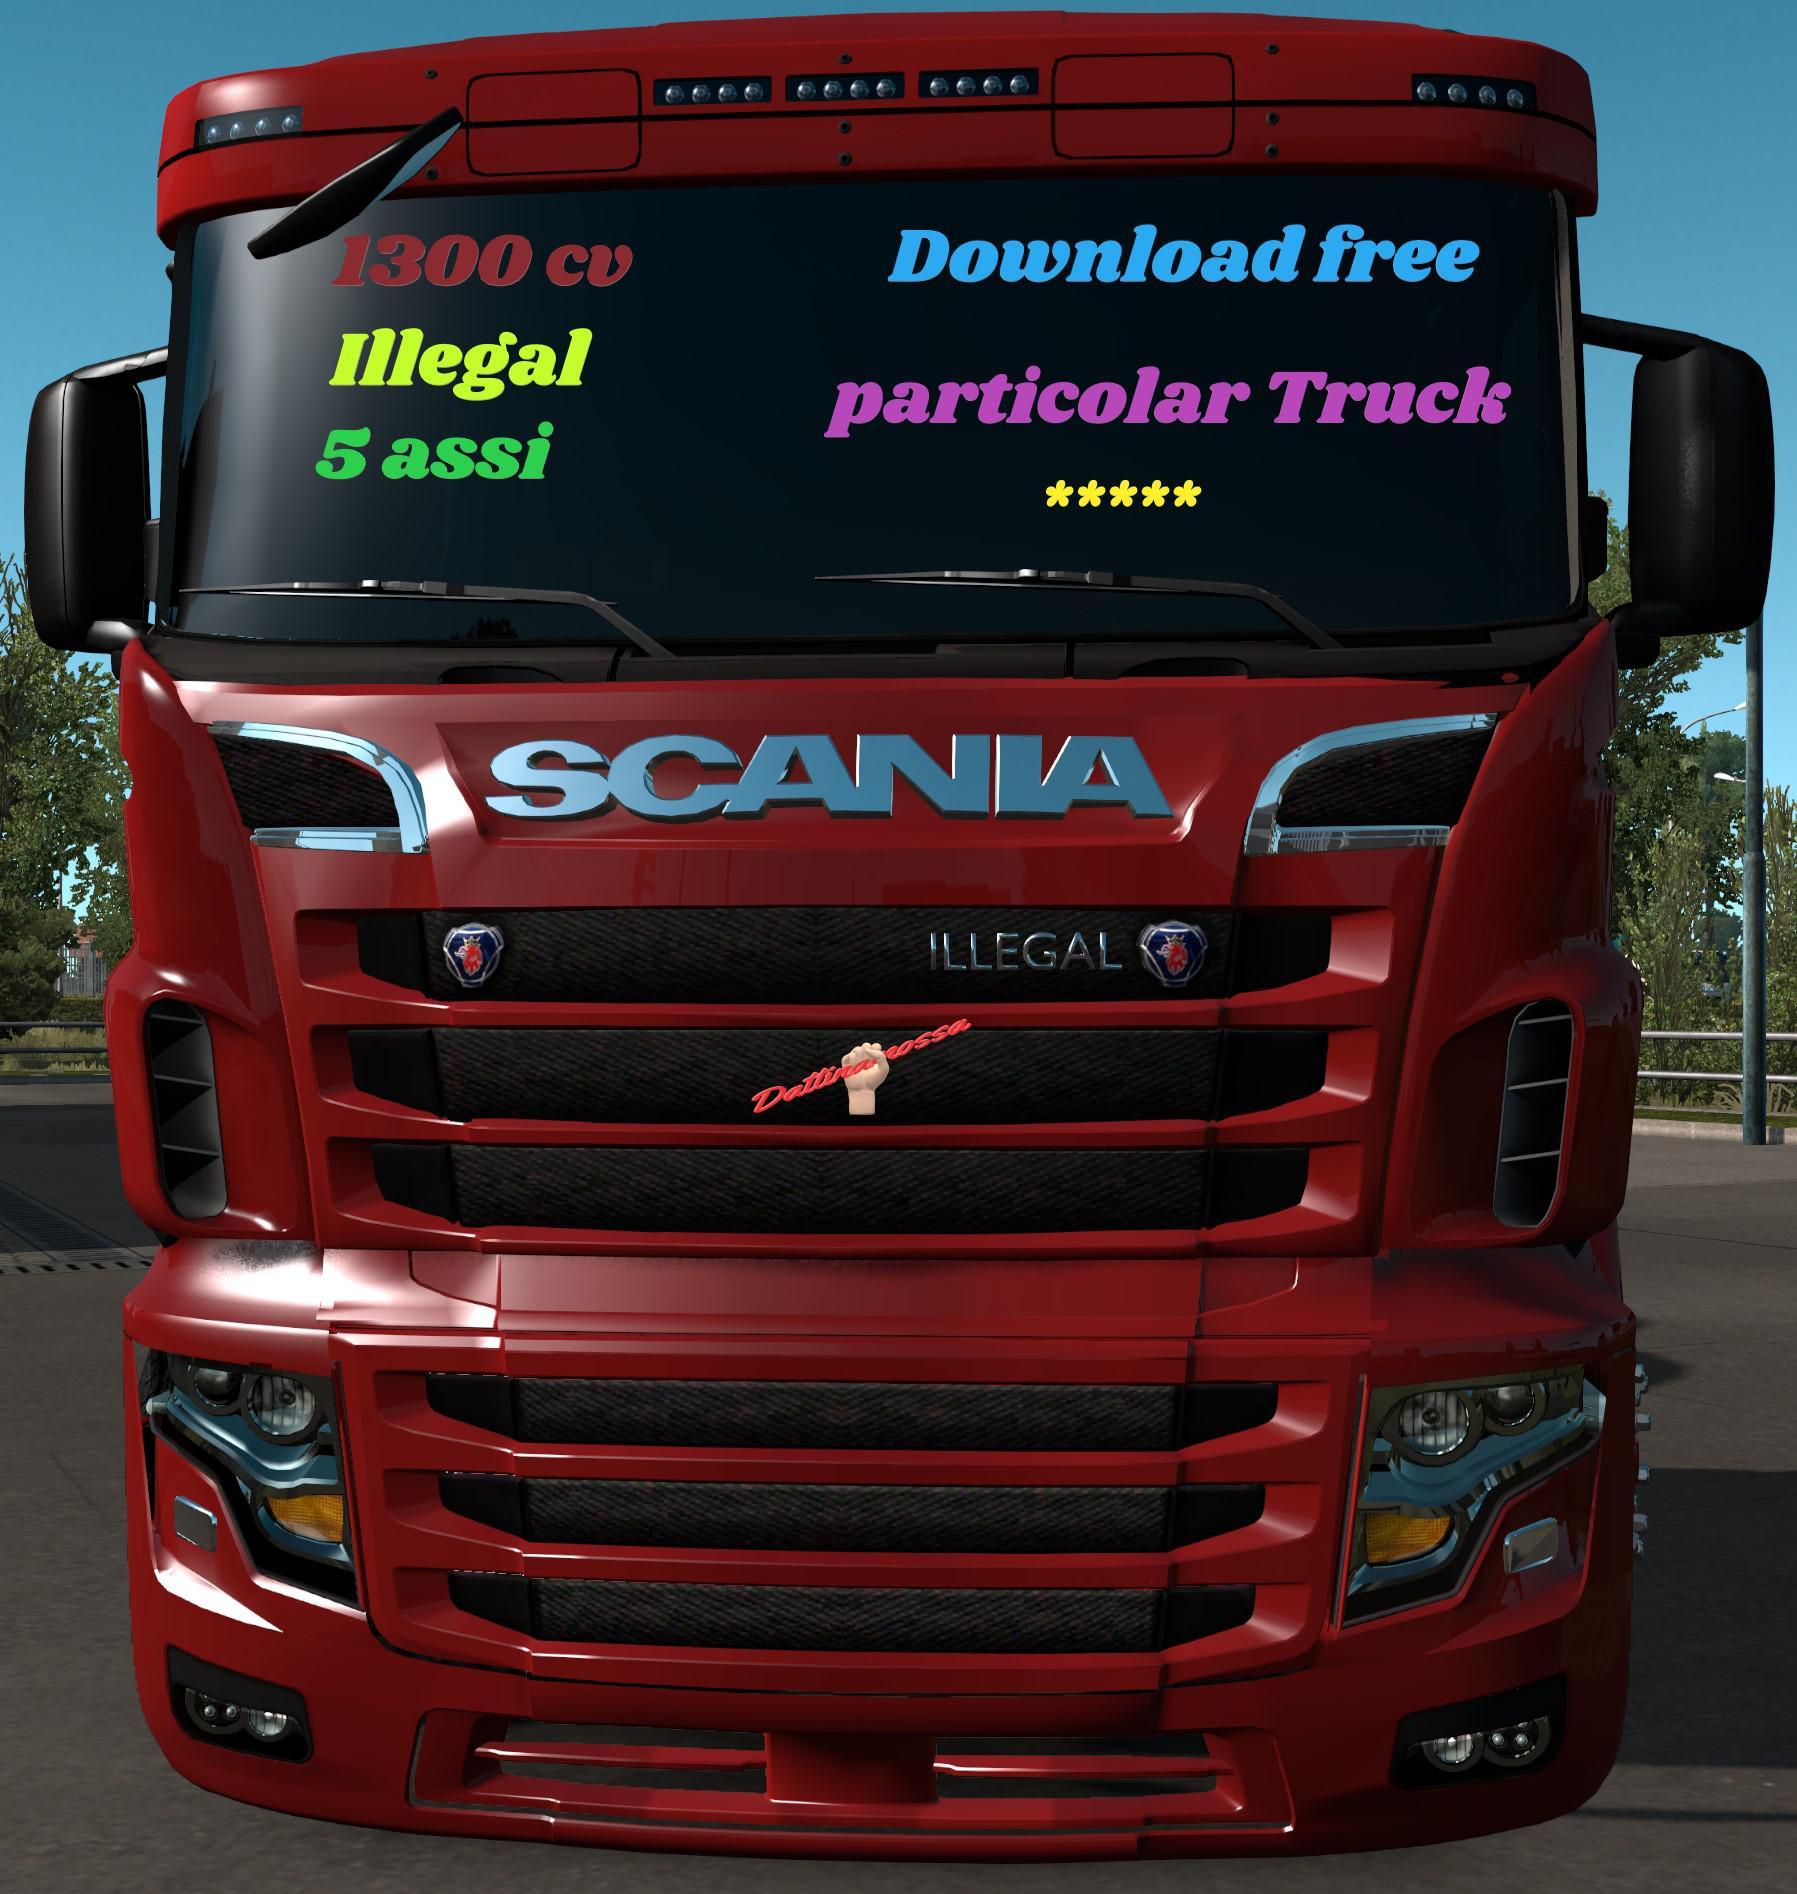 Euro Truck Simulator 2 trucks e carros - download ETS 2 caminhões